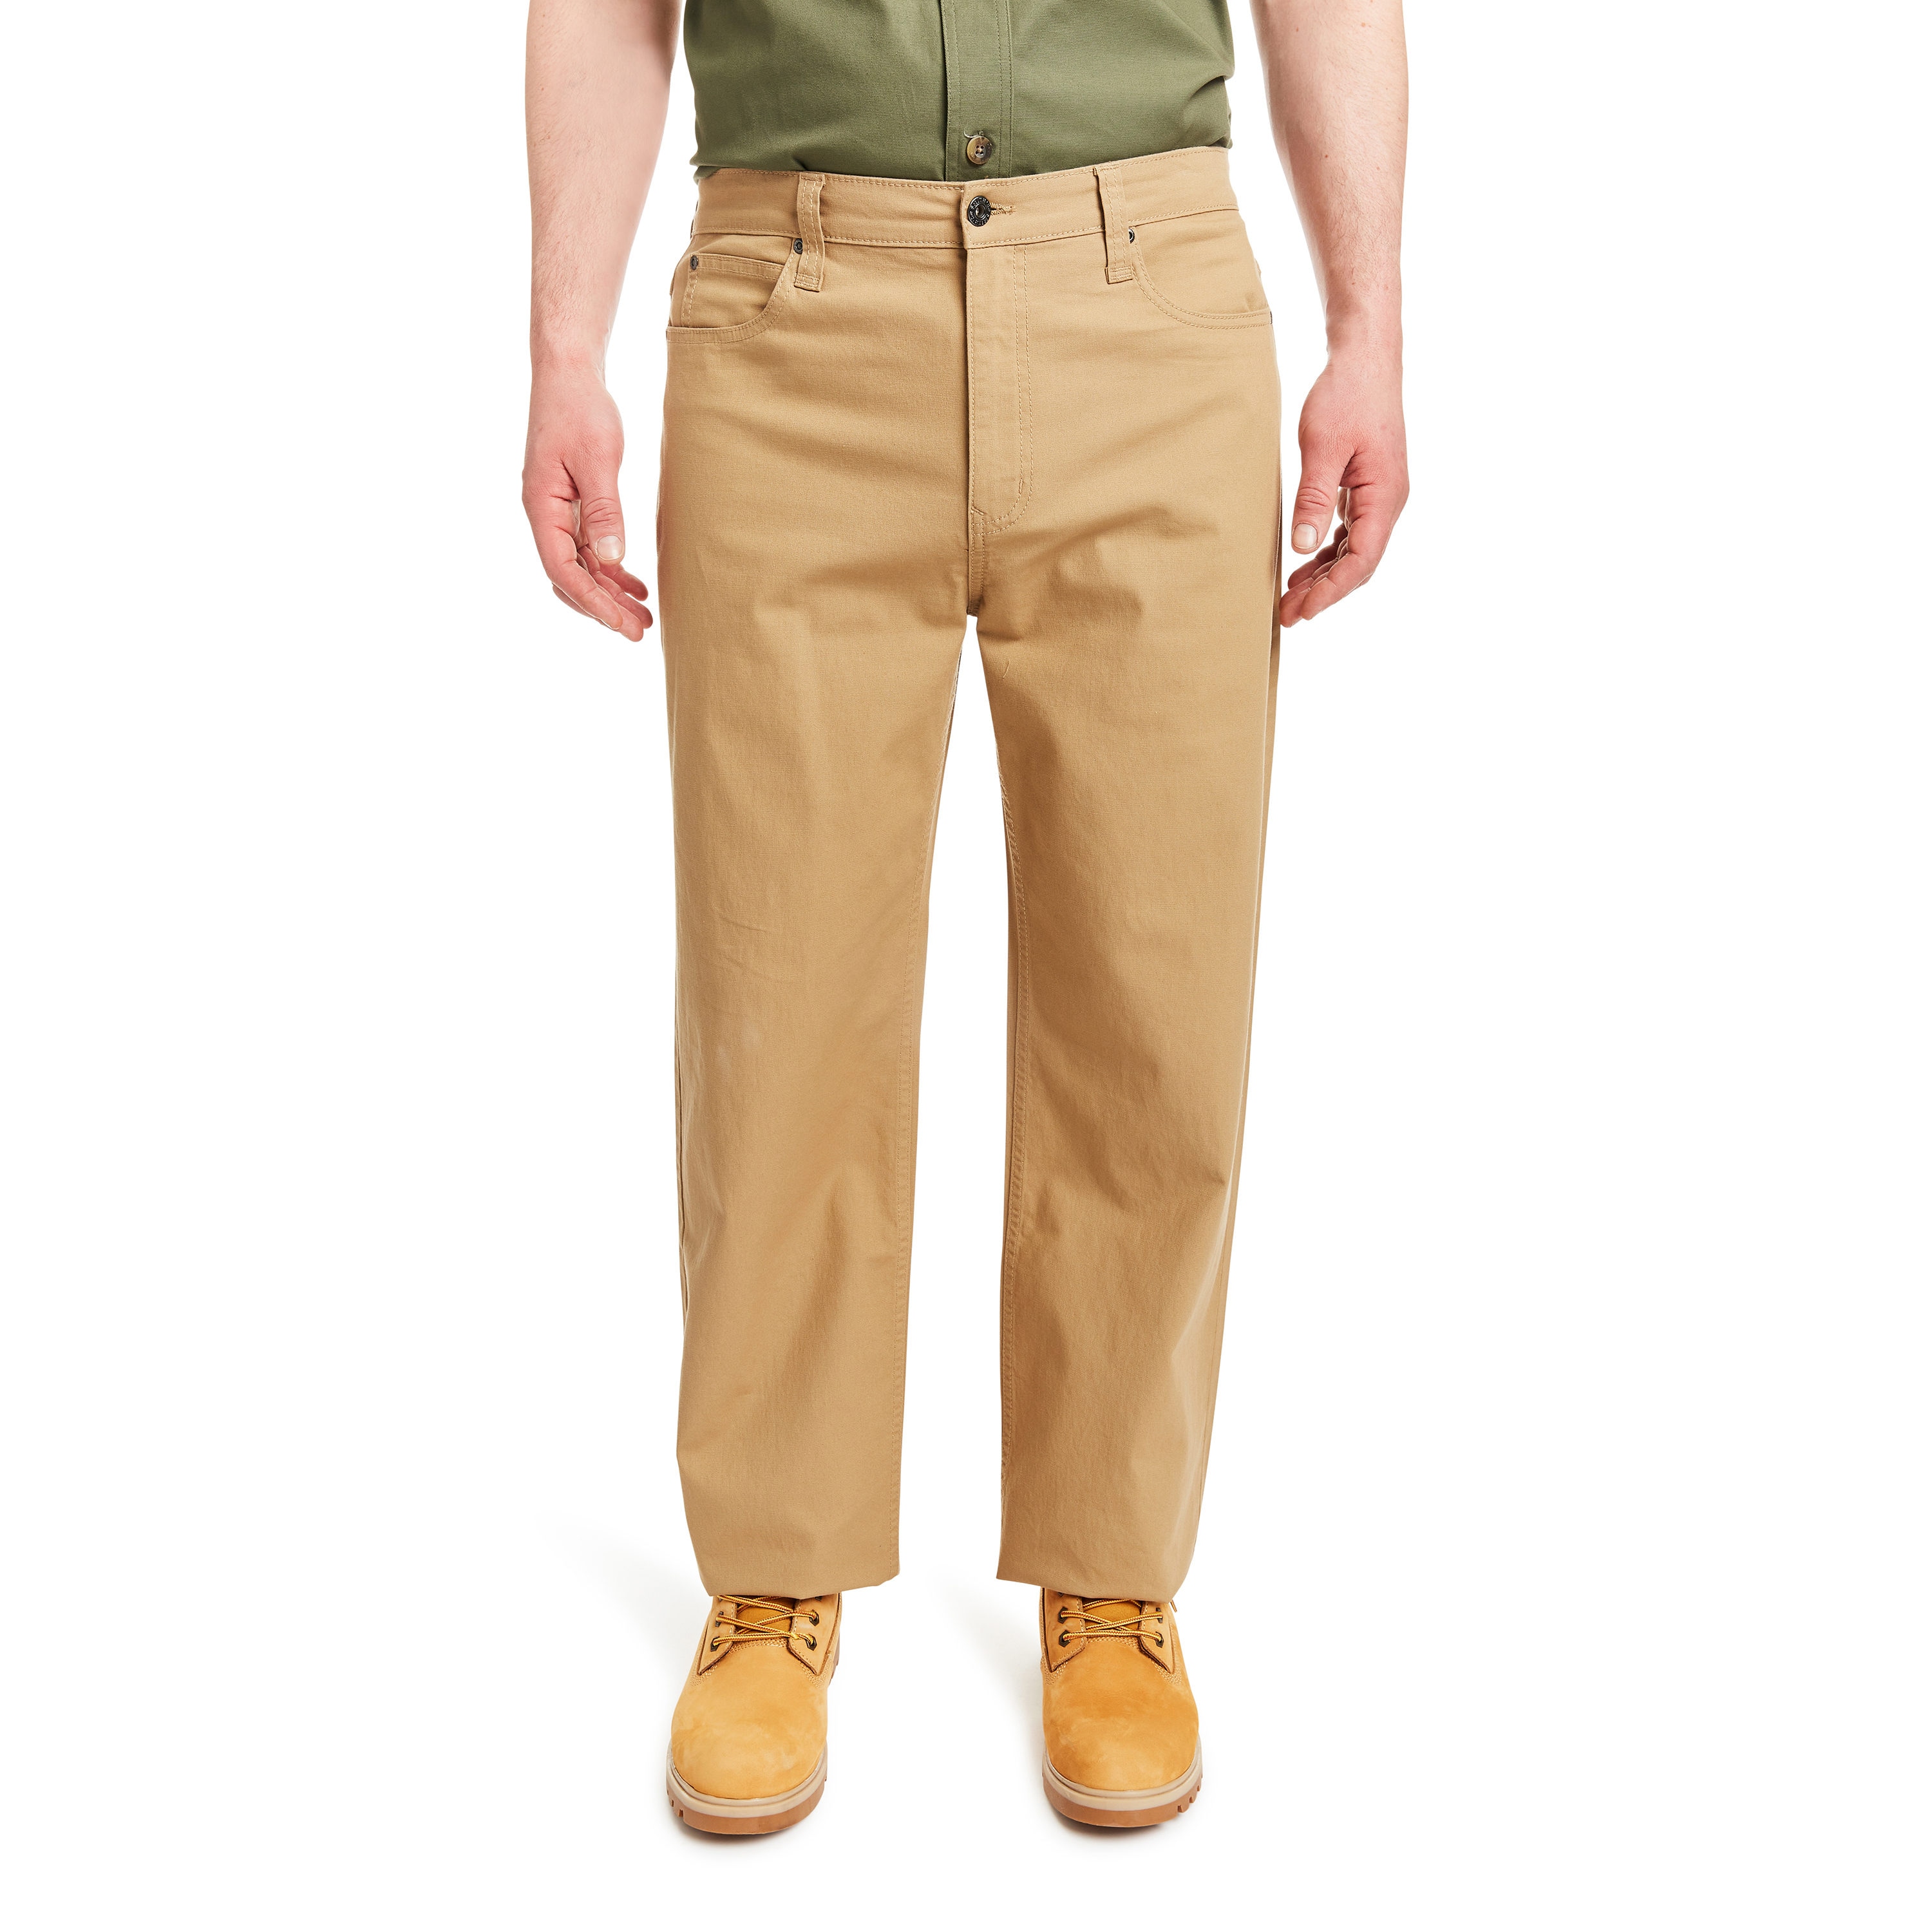 Smith's Workwear Men's Khaki Canvas Work Pants (32 X 30) in the